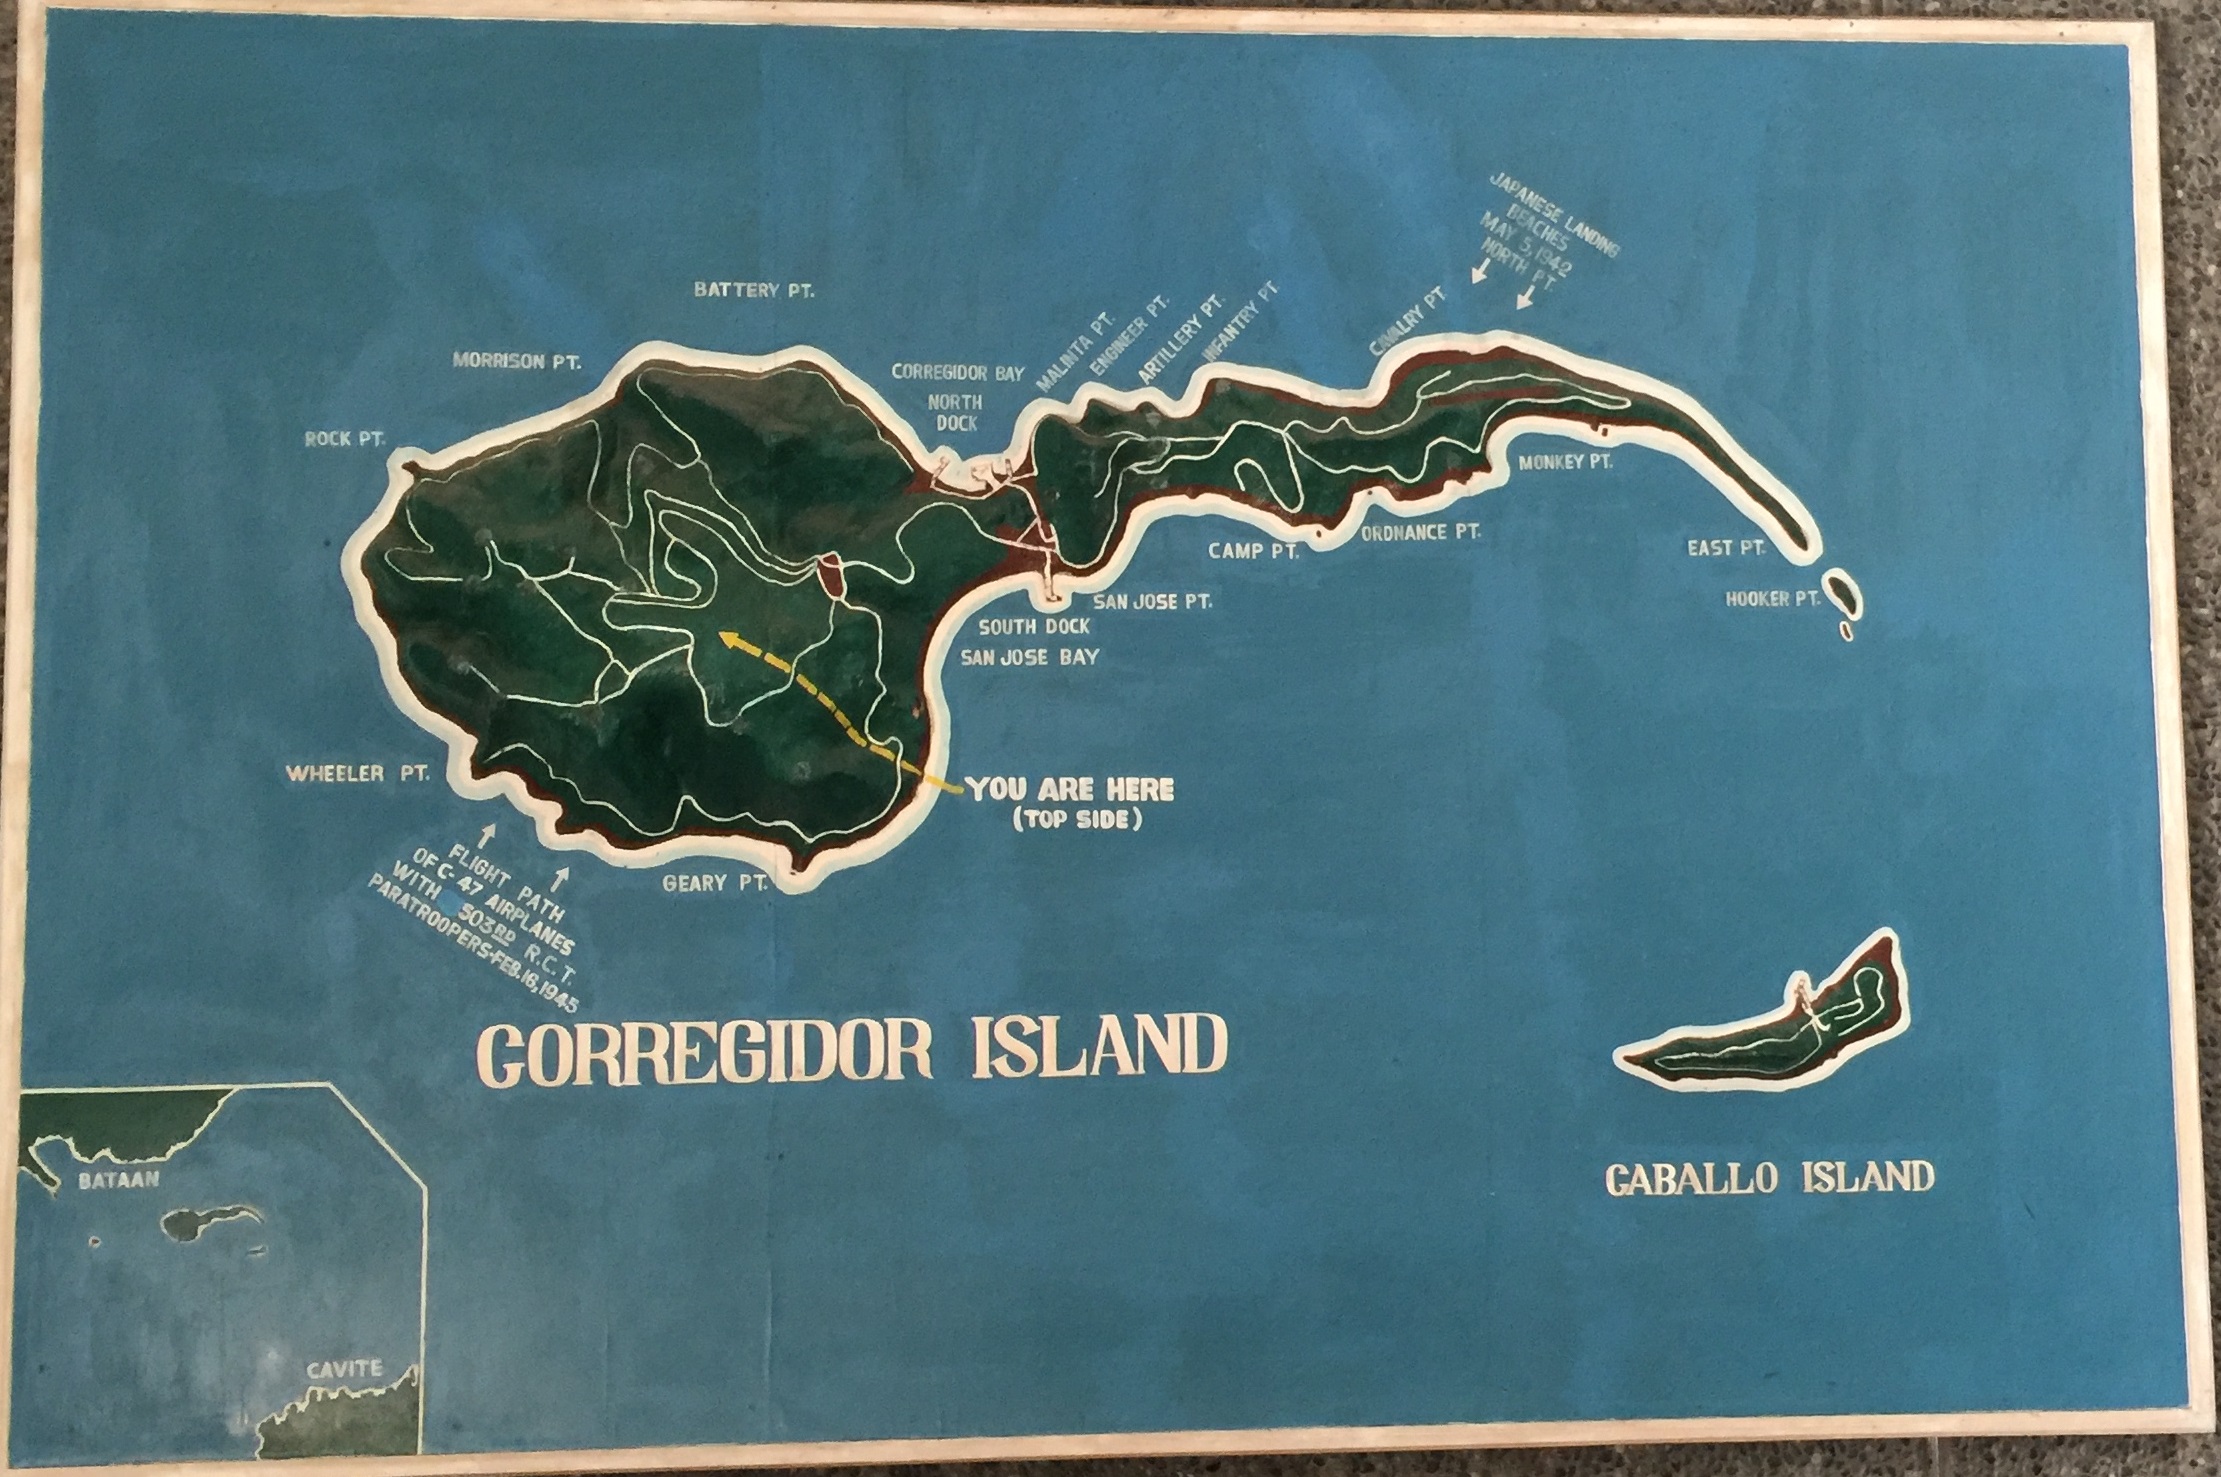 The tadpole shape of Corregidor island.